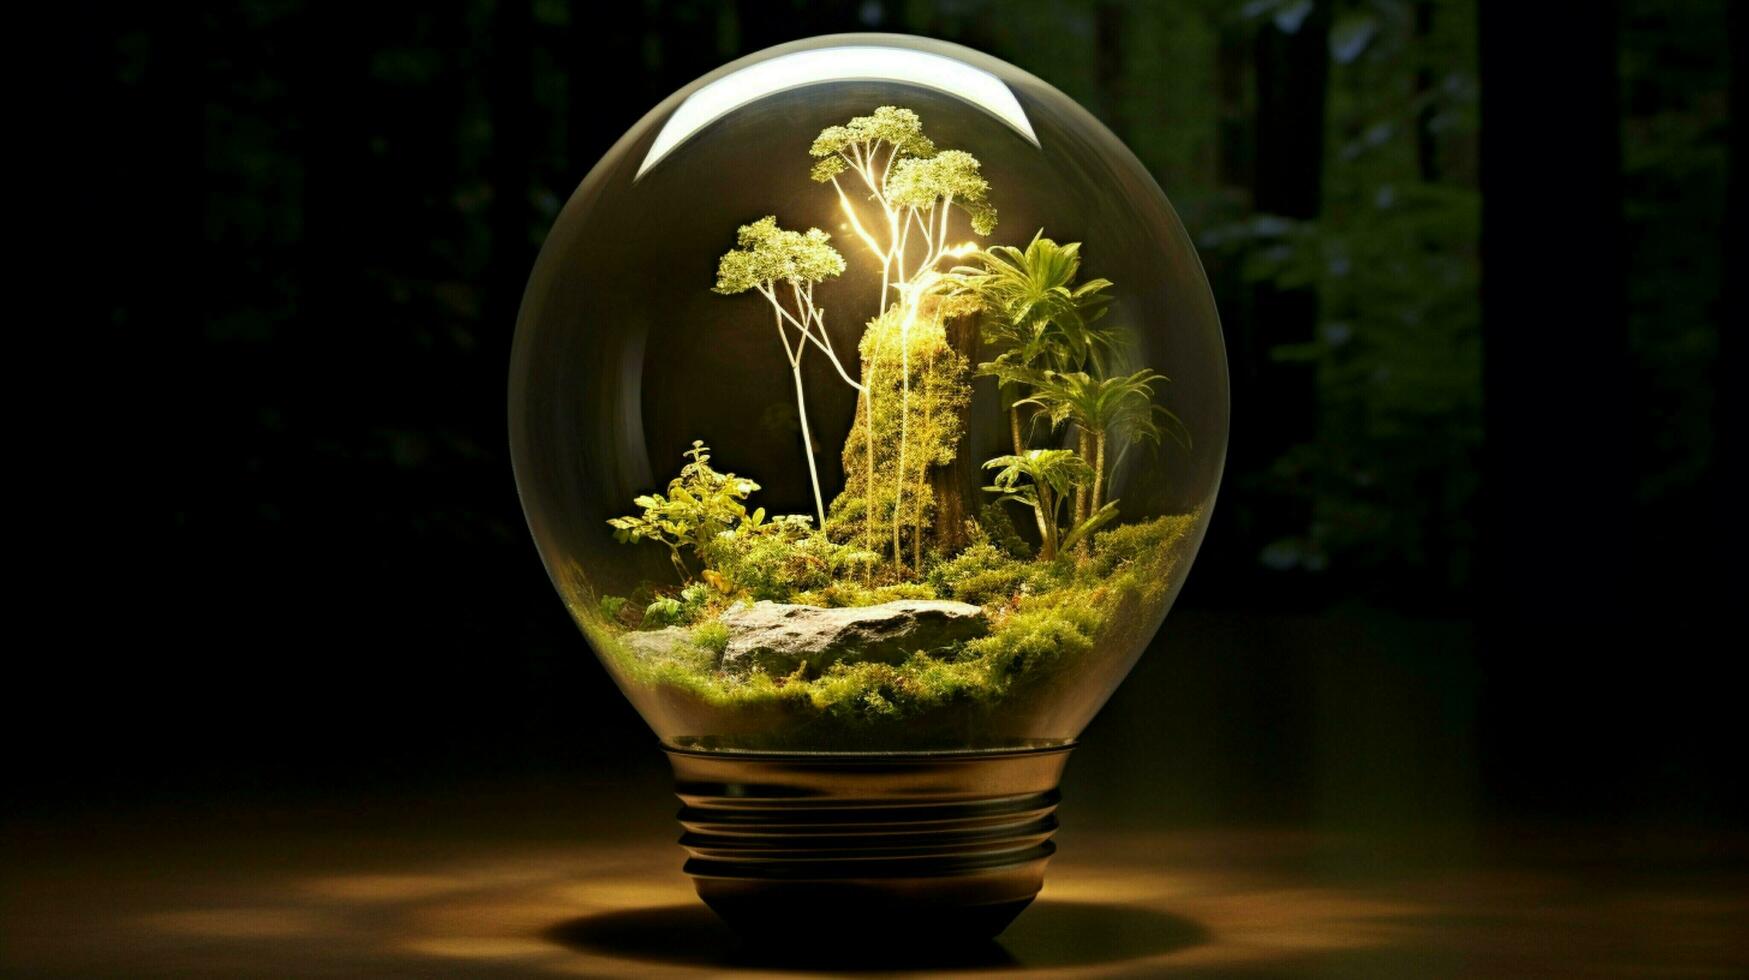 glowing electric lamp illuminates nature bright ideas photo